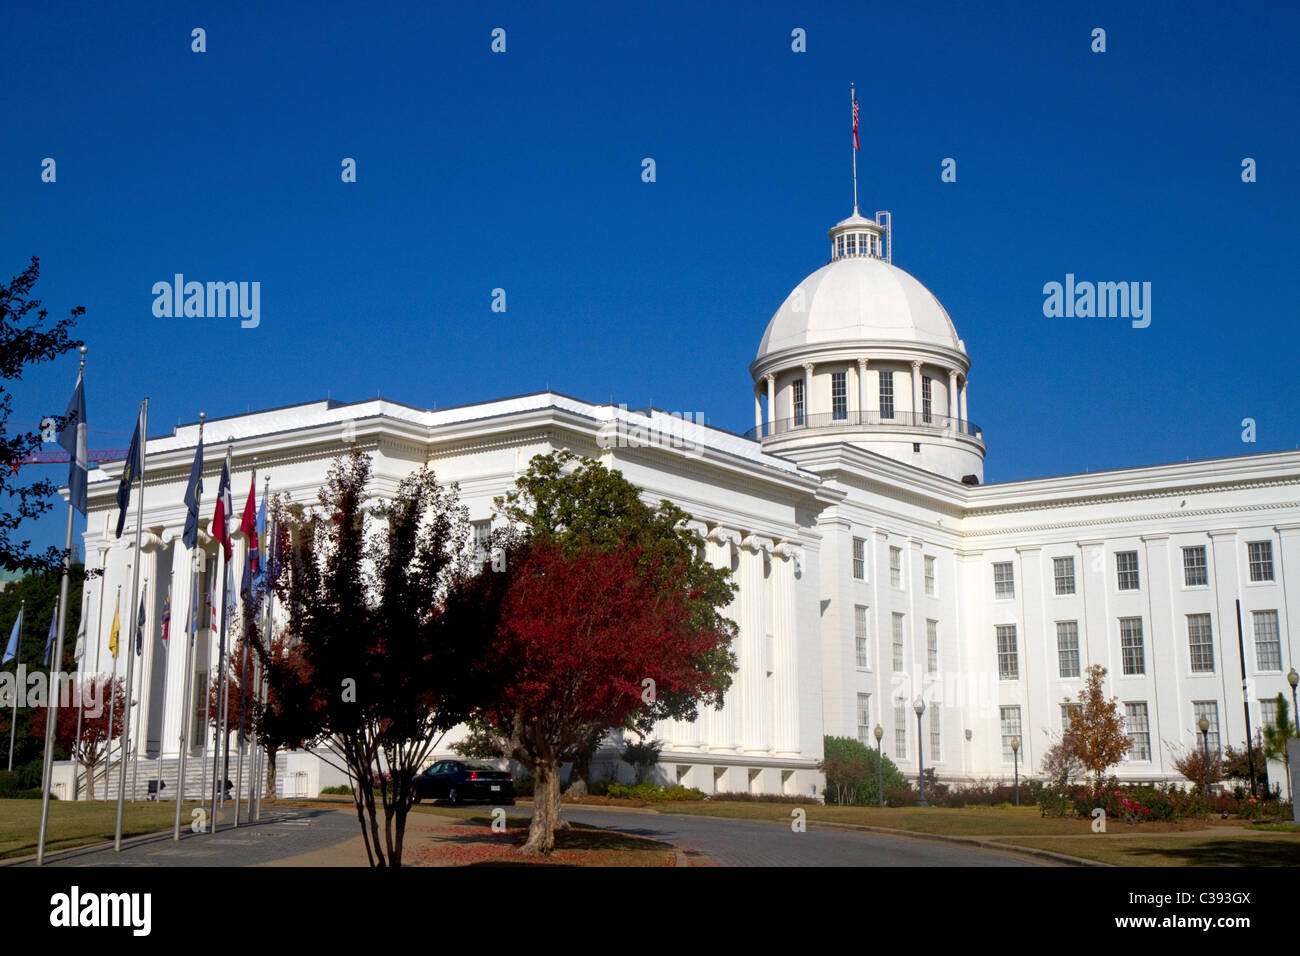 L'Alabama State Capitol Building si trova sulla collina di capra in Montgomery, Alabama, Stati Uniti d'America. Foto Stock